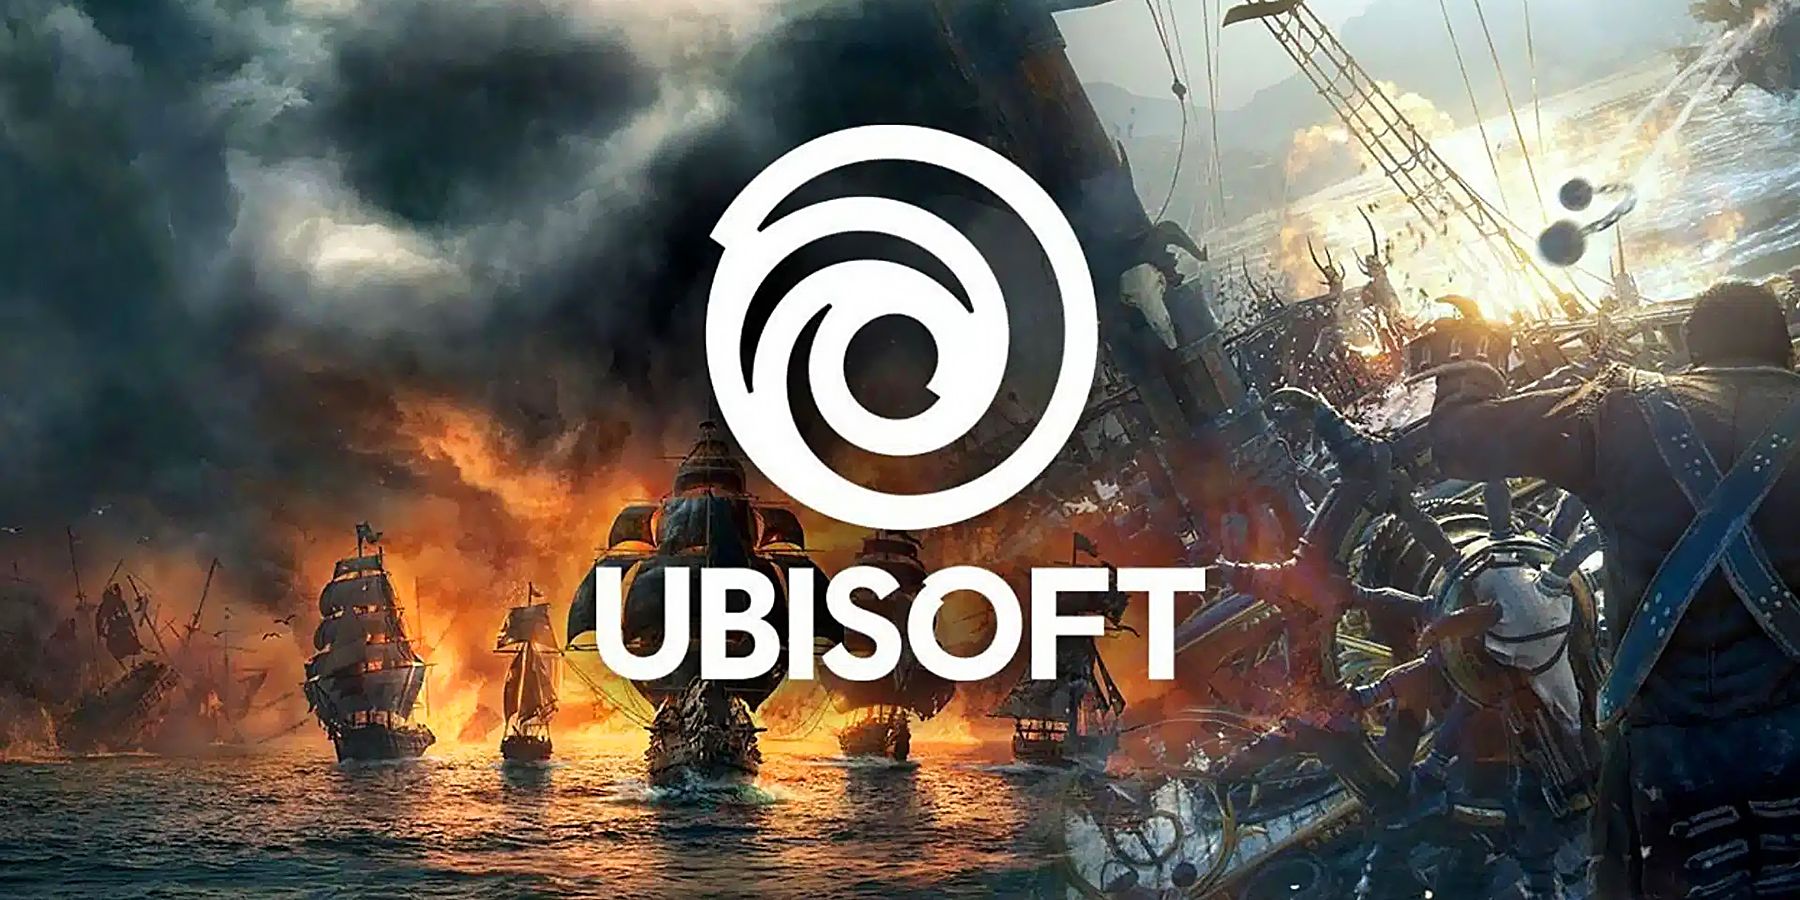 Ubisoft logo skull and bones images